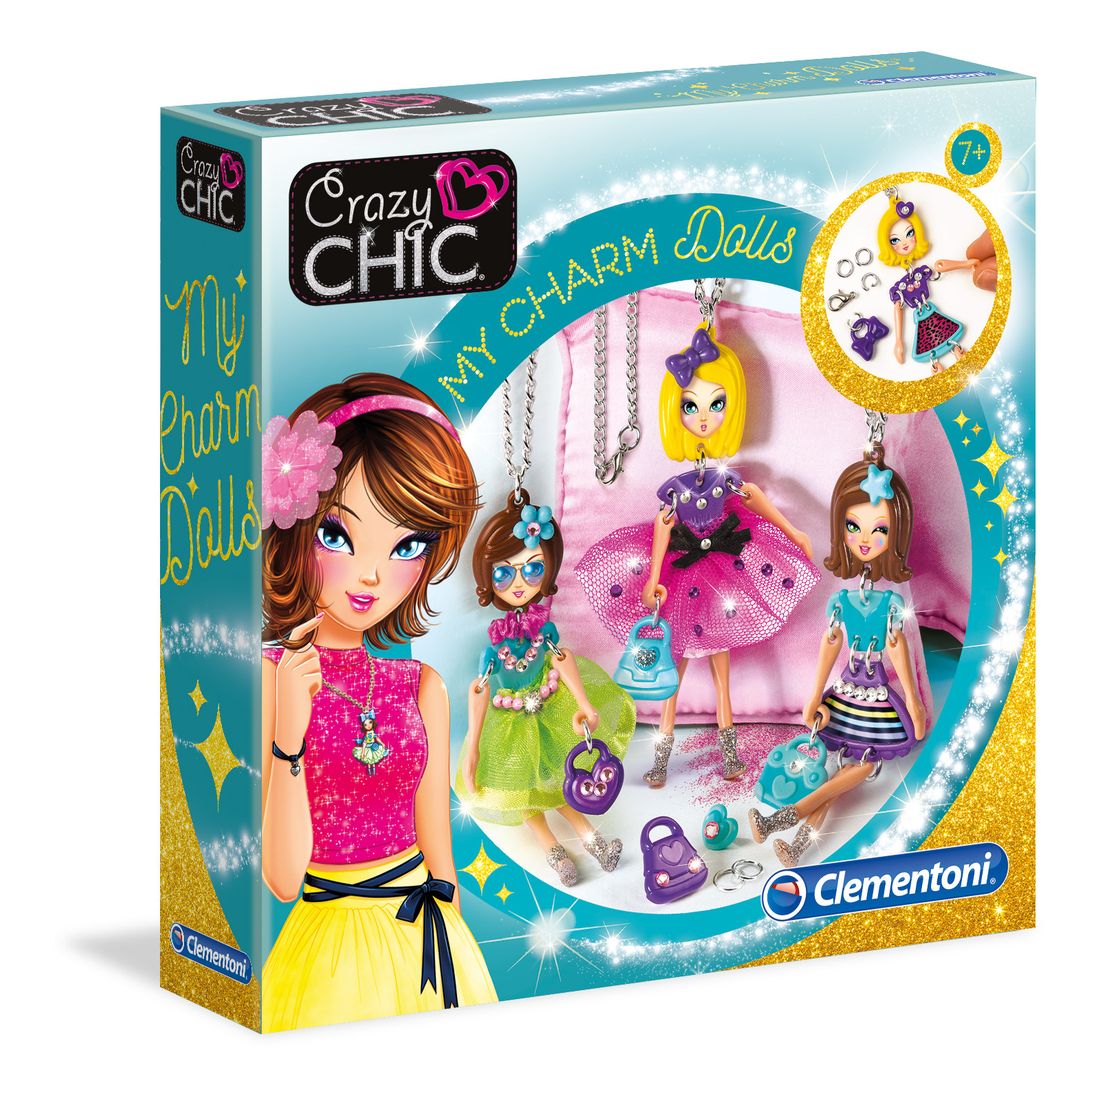 Clementoni Crazy Chic Charm Dolls